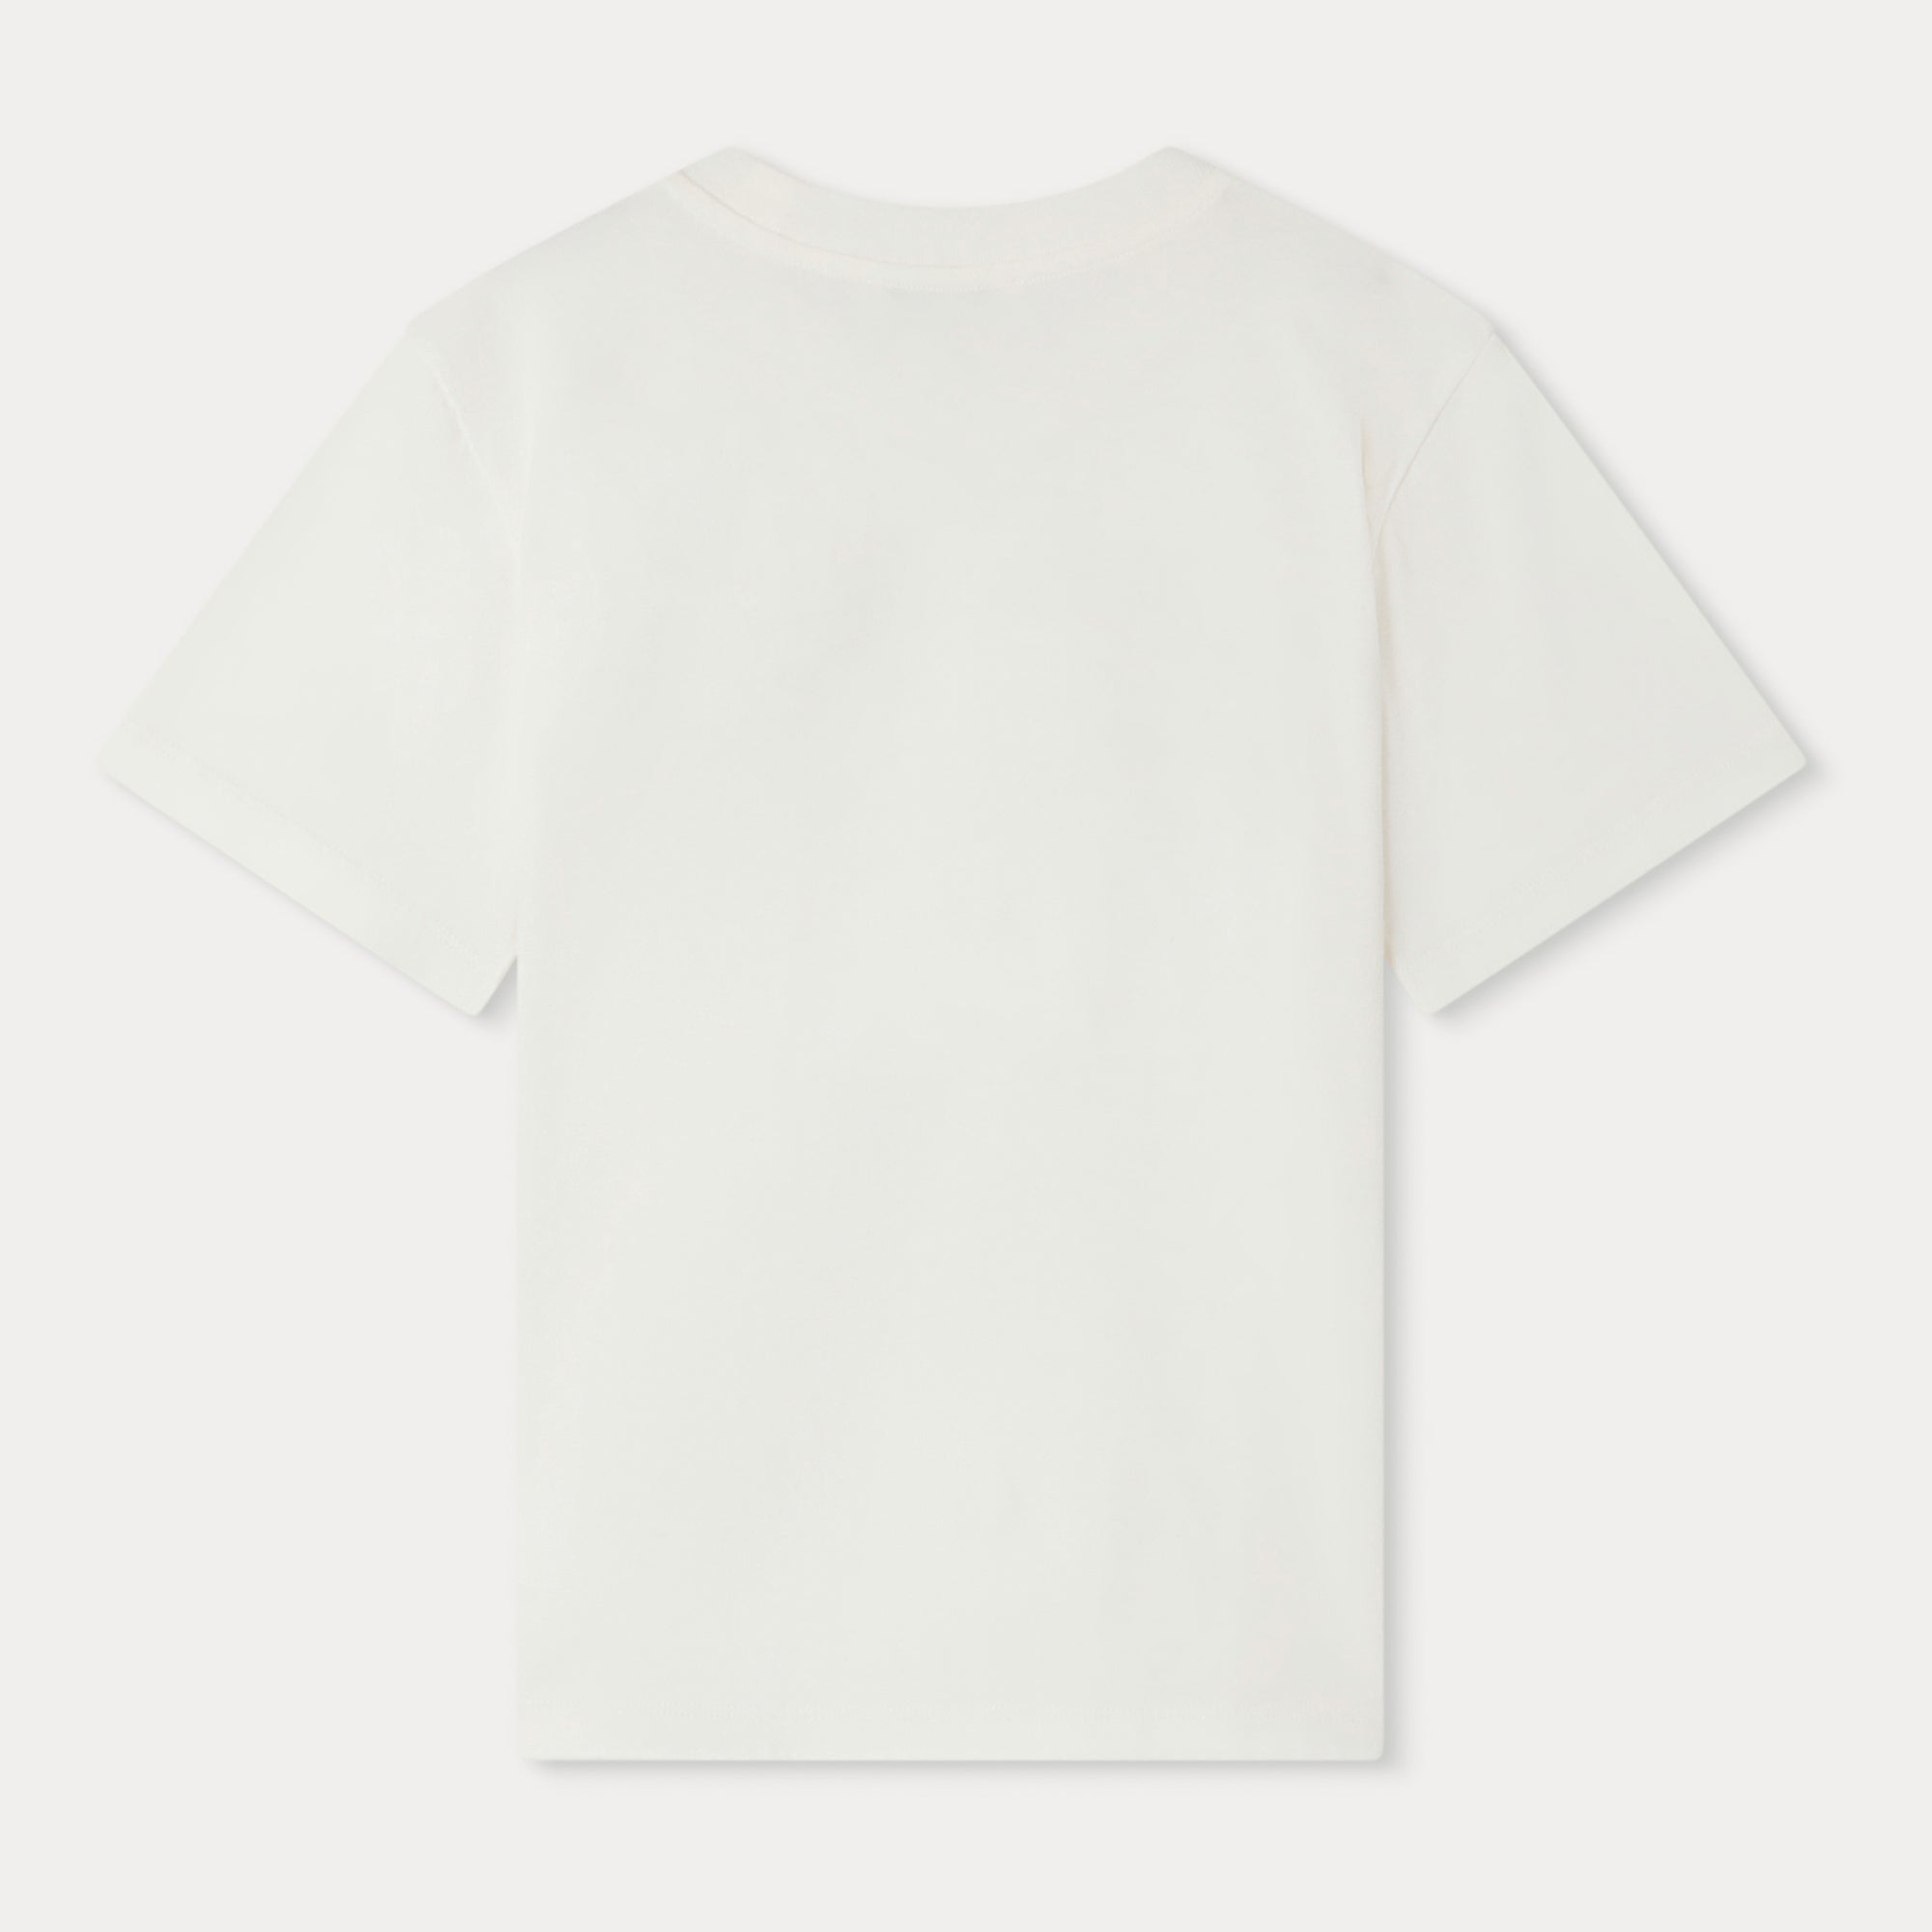 Boys White Printed Cotton T-Shirt